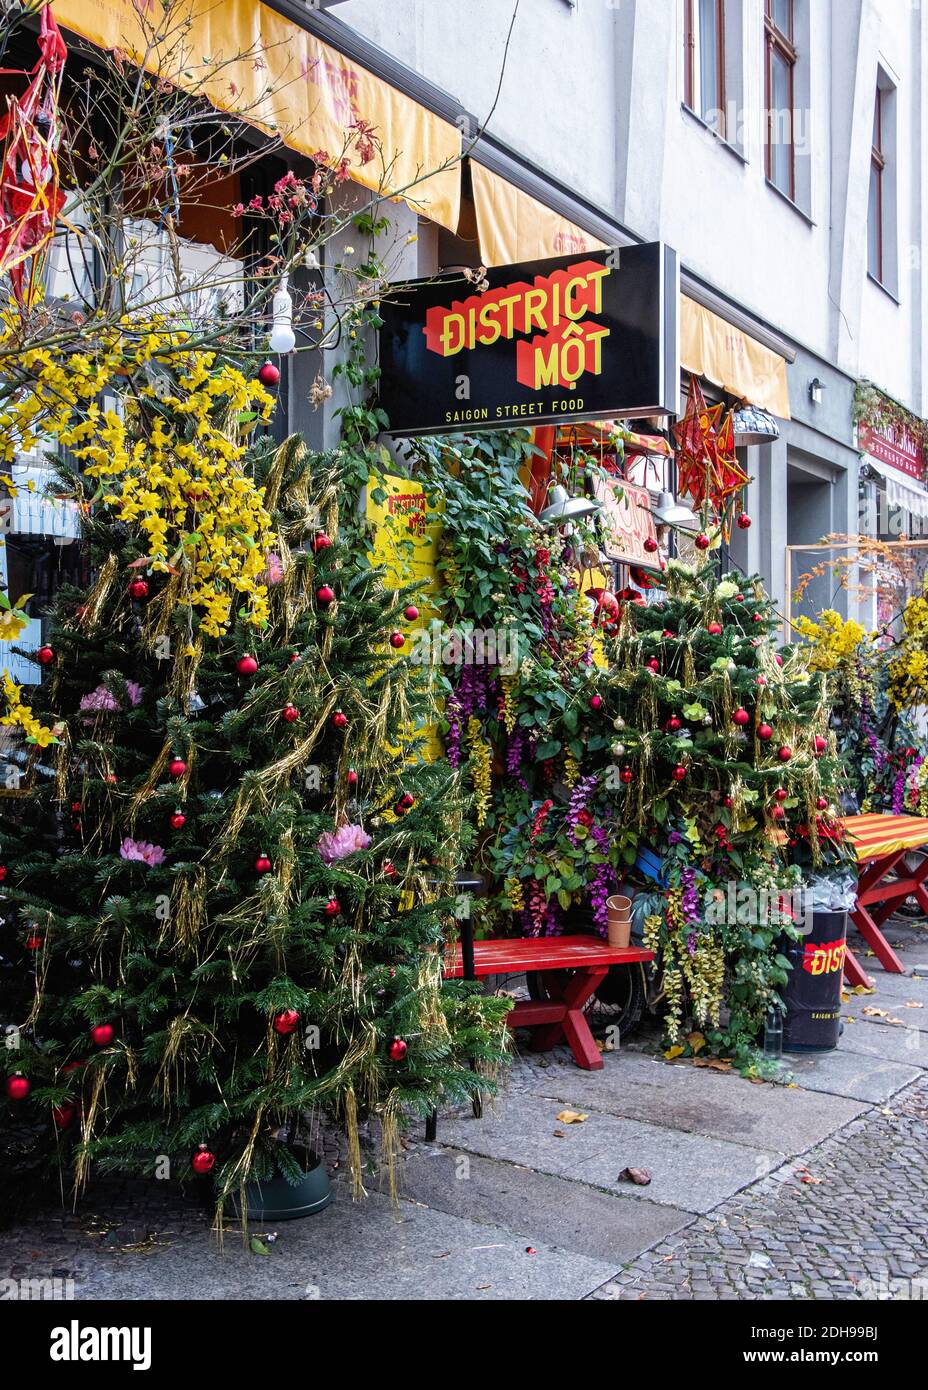 District mot restaurant with Colouful Christmas tree on pavement. Kleine Rosenthaler Strasse, Mitte, Berlin Stock Photo